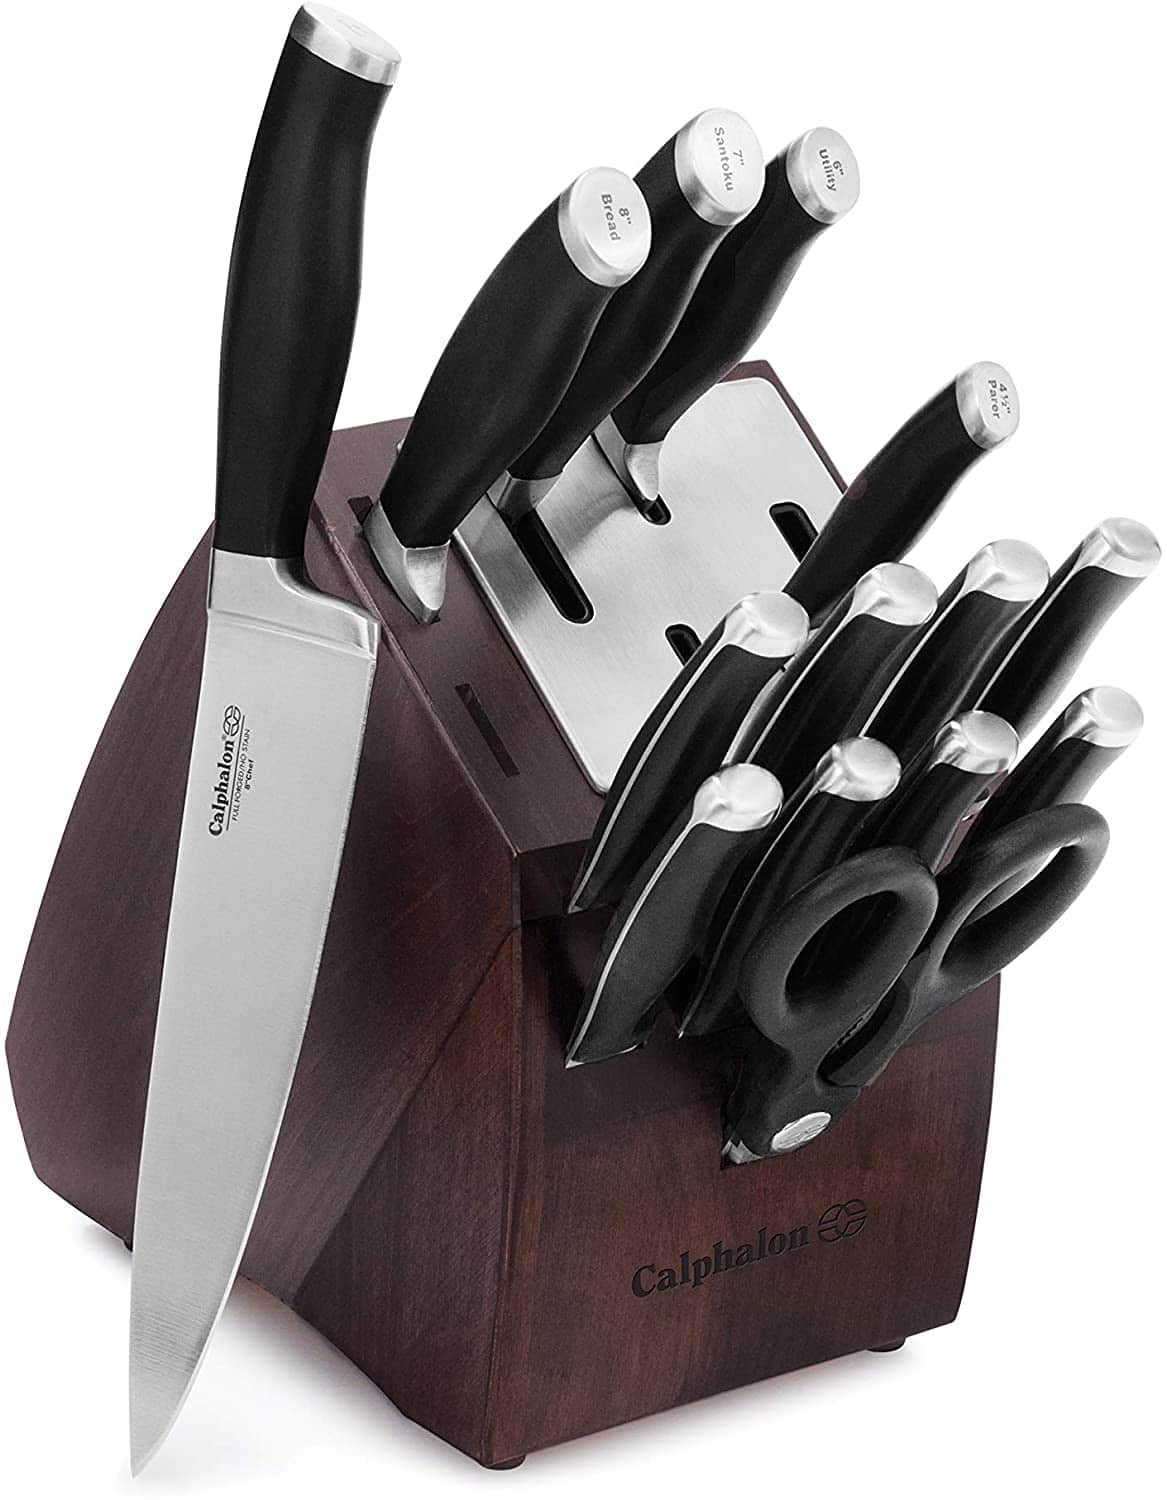 Calphalon Contemporary Self-Sharpening 15-Piece Knife Block Set with SharpIN Technology